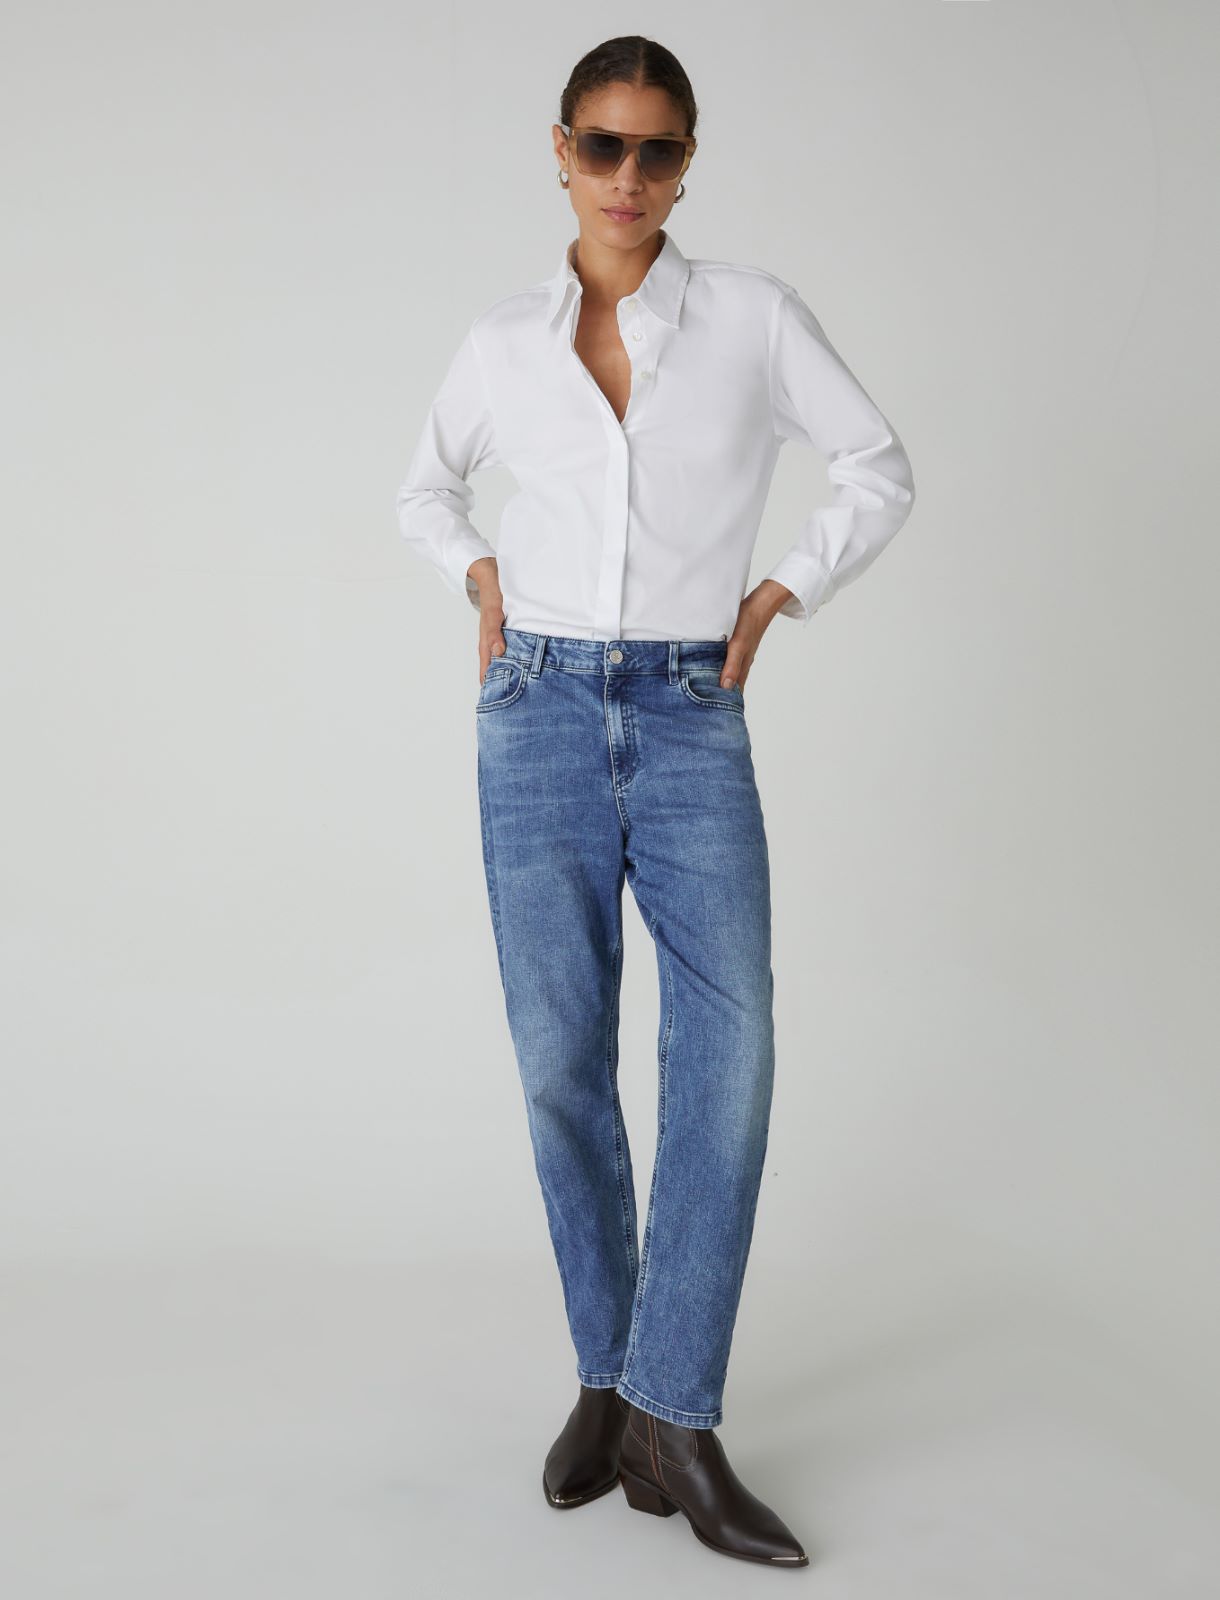 Jeans tomboy - Blue jeans - Marella